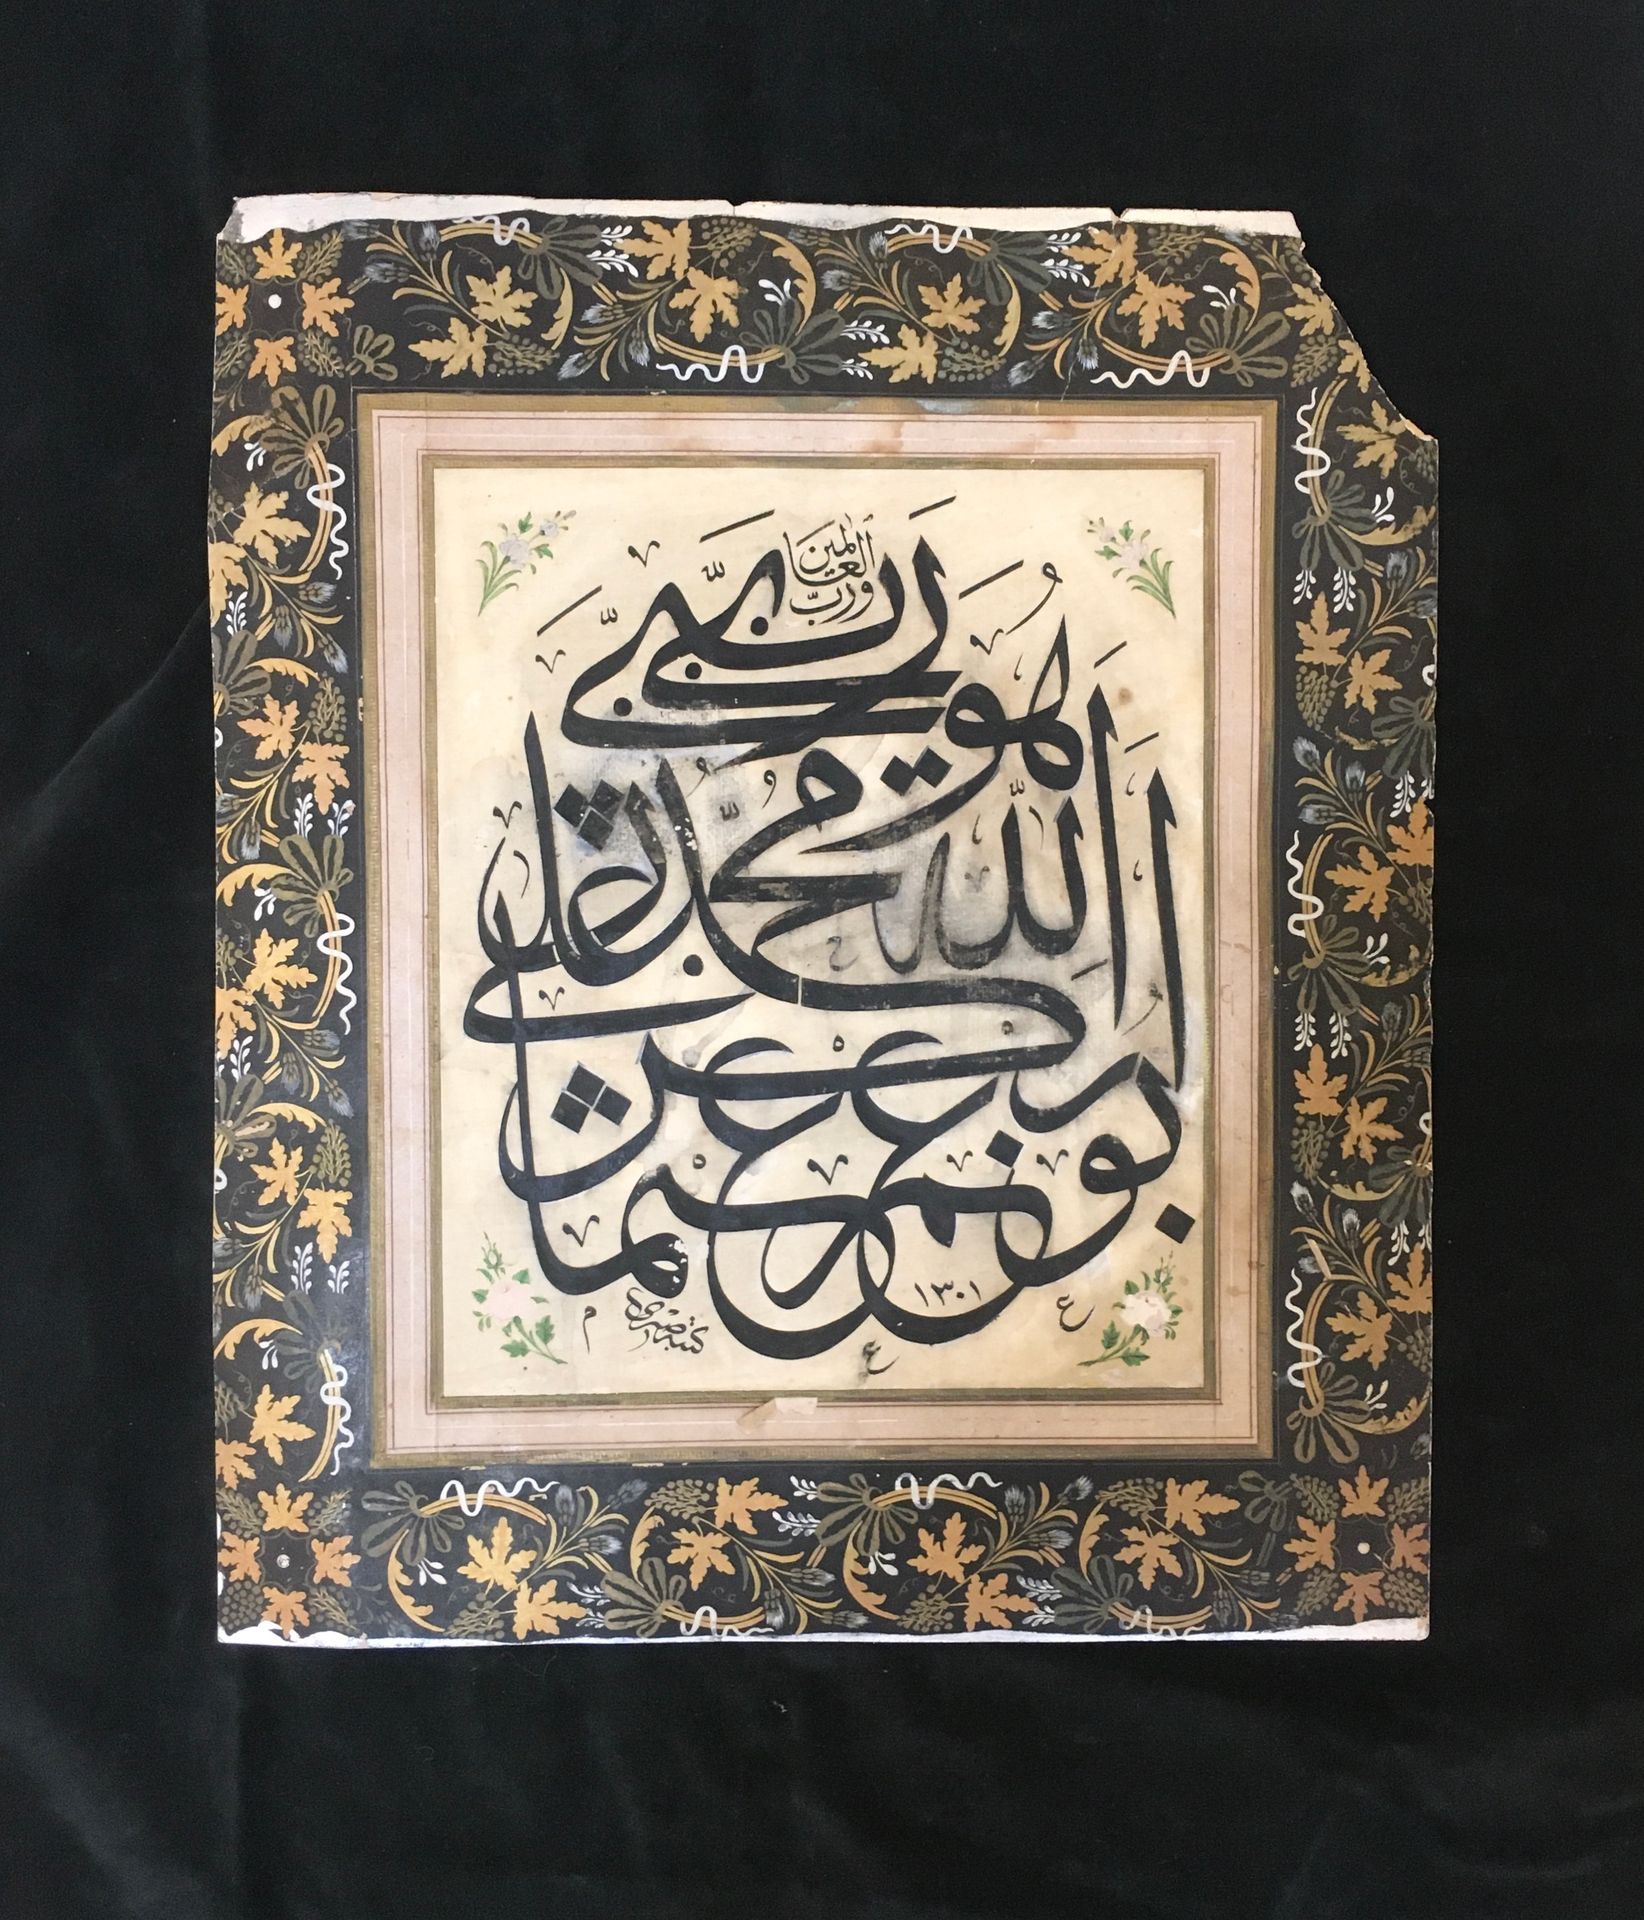 Calligraphie signée Sabri et datée 1301H. '''= 1883 titulado "Al-'alamein wa hab&hellip;